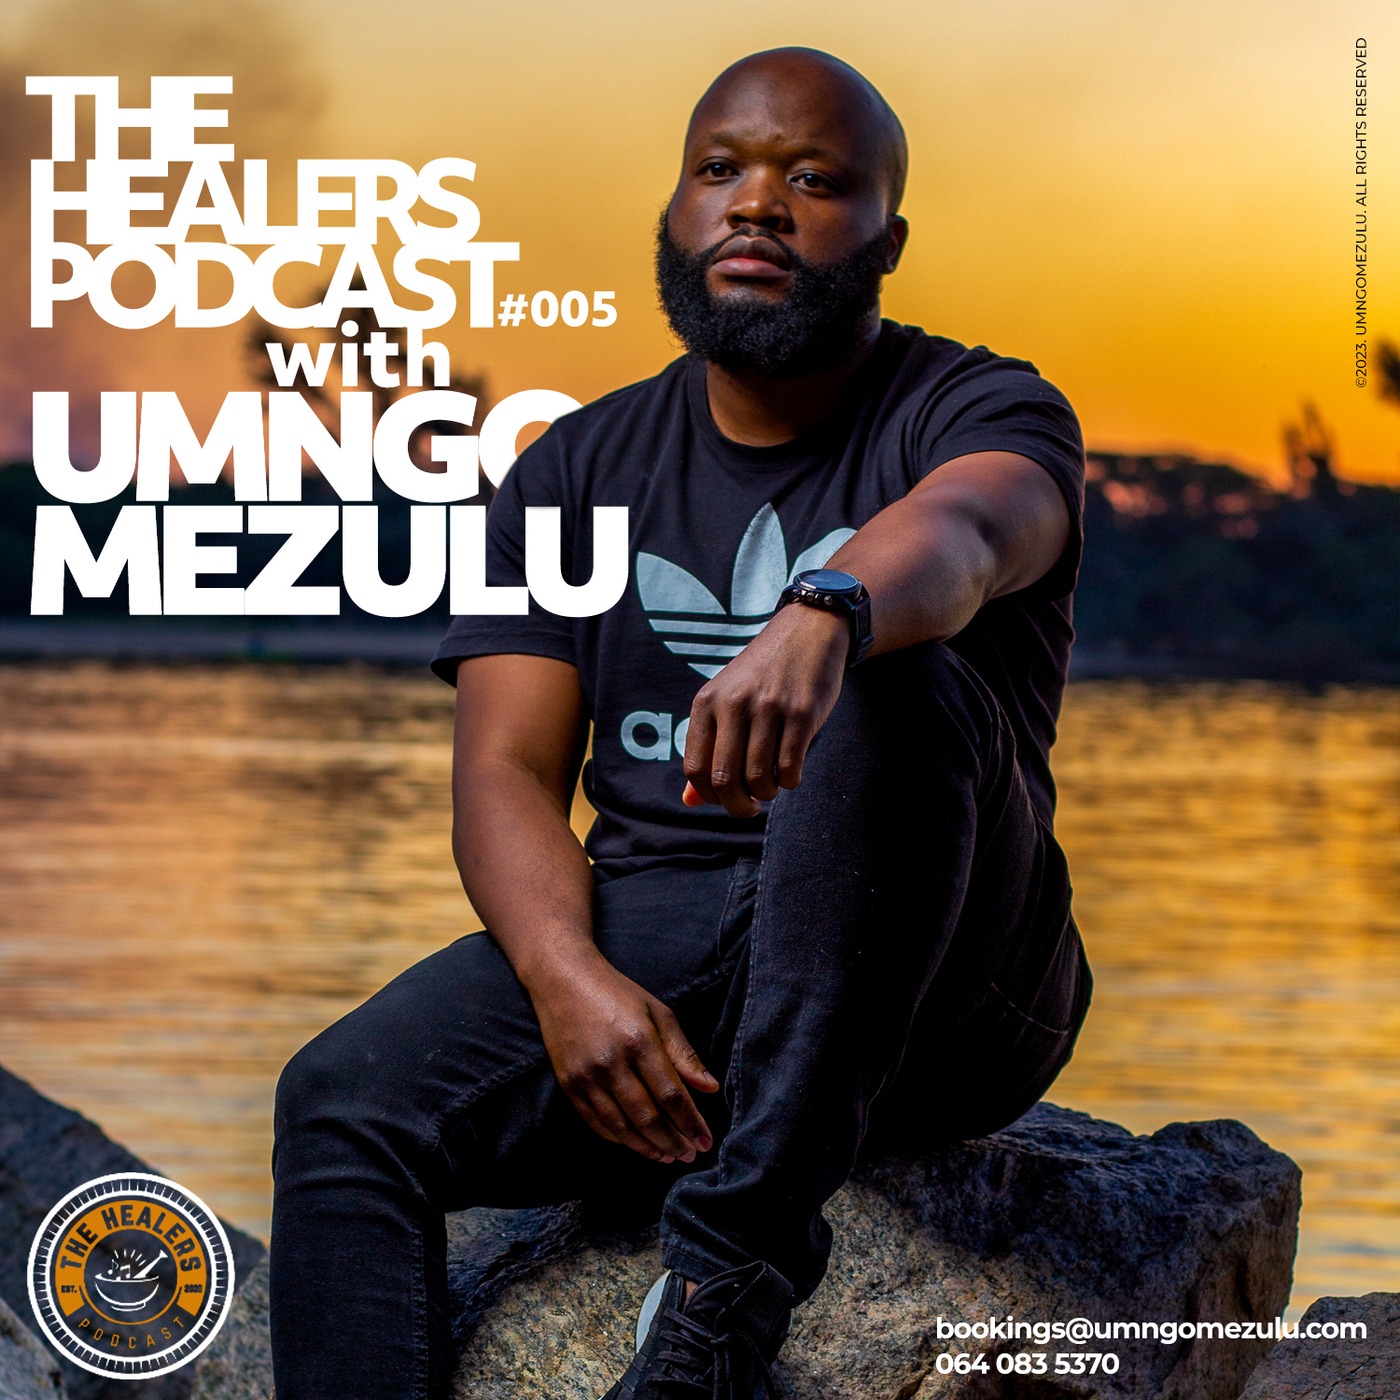 “Show 005” The Healers Podcast With UMngomezulu